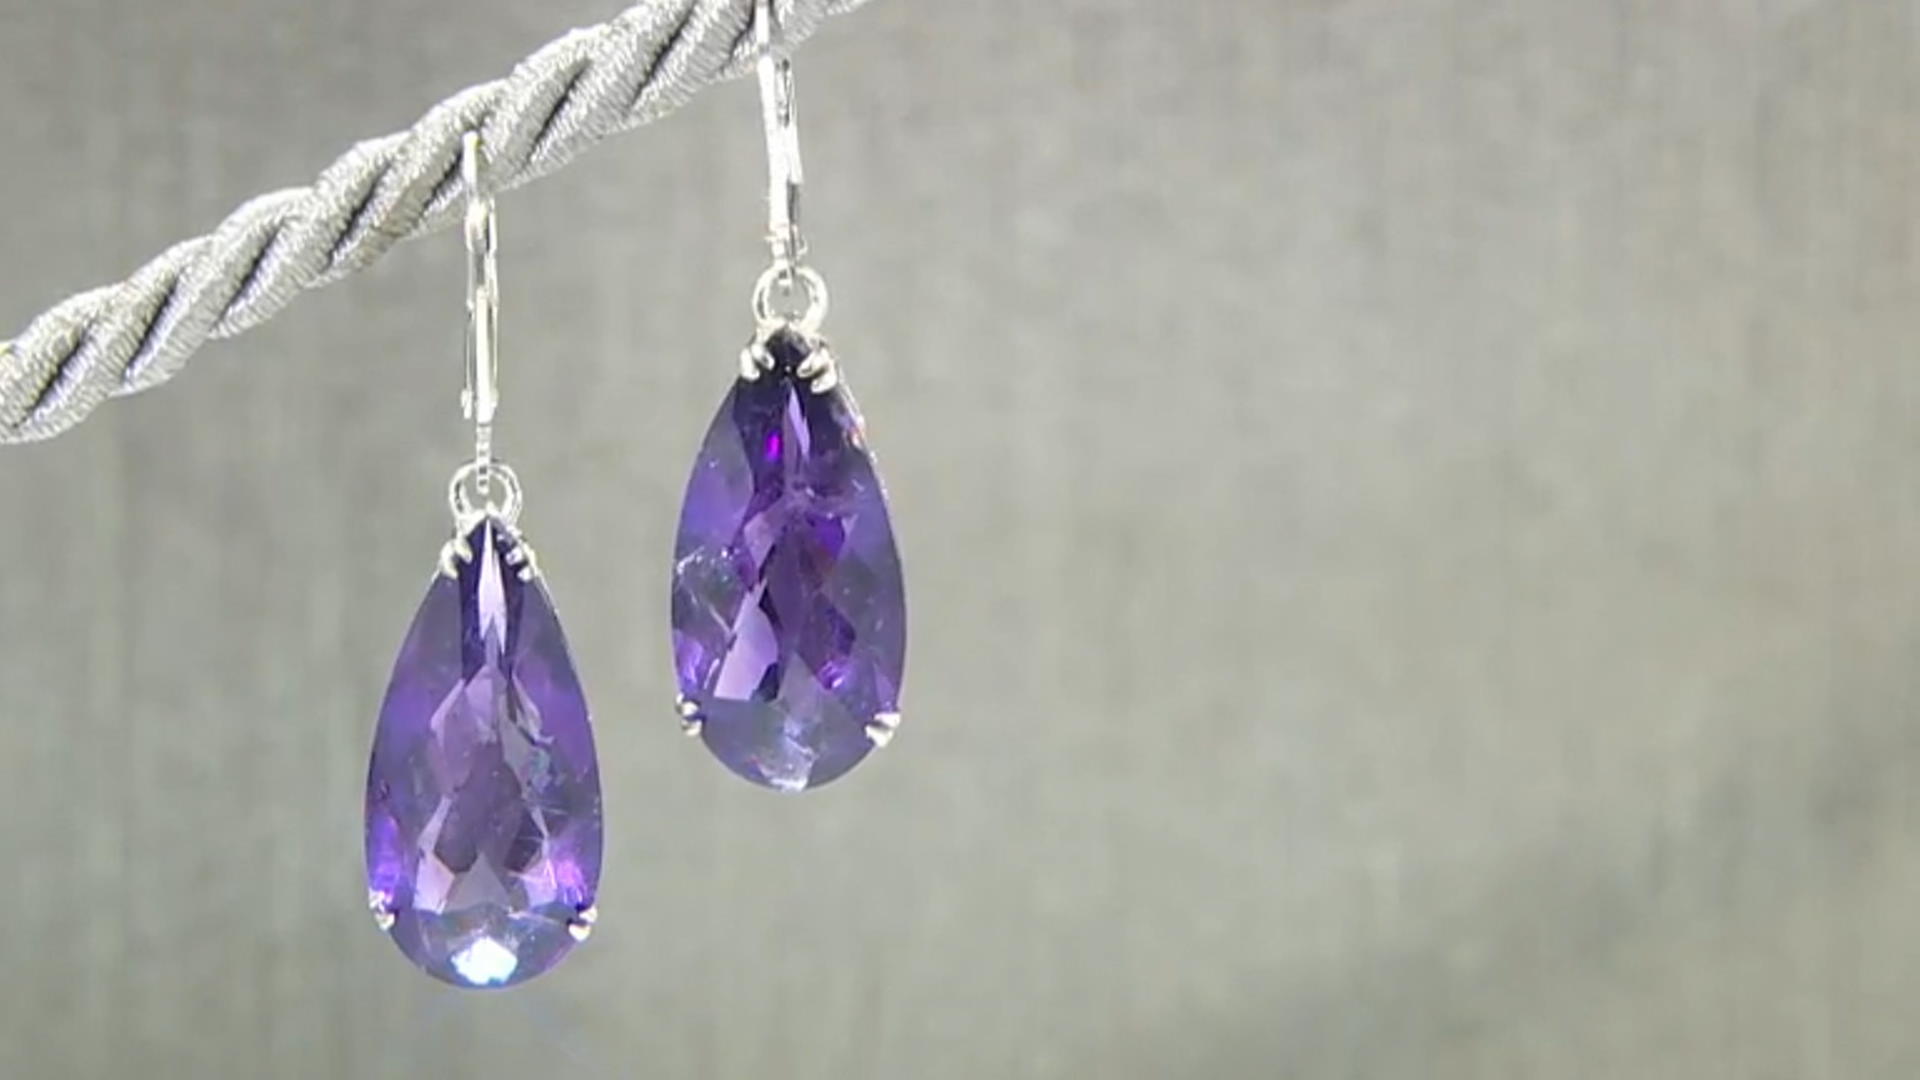 Purple Amethyst Rhodium Over Sterling Silver Dangle Earrings 16.00ctw